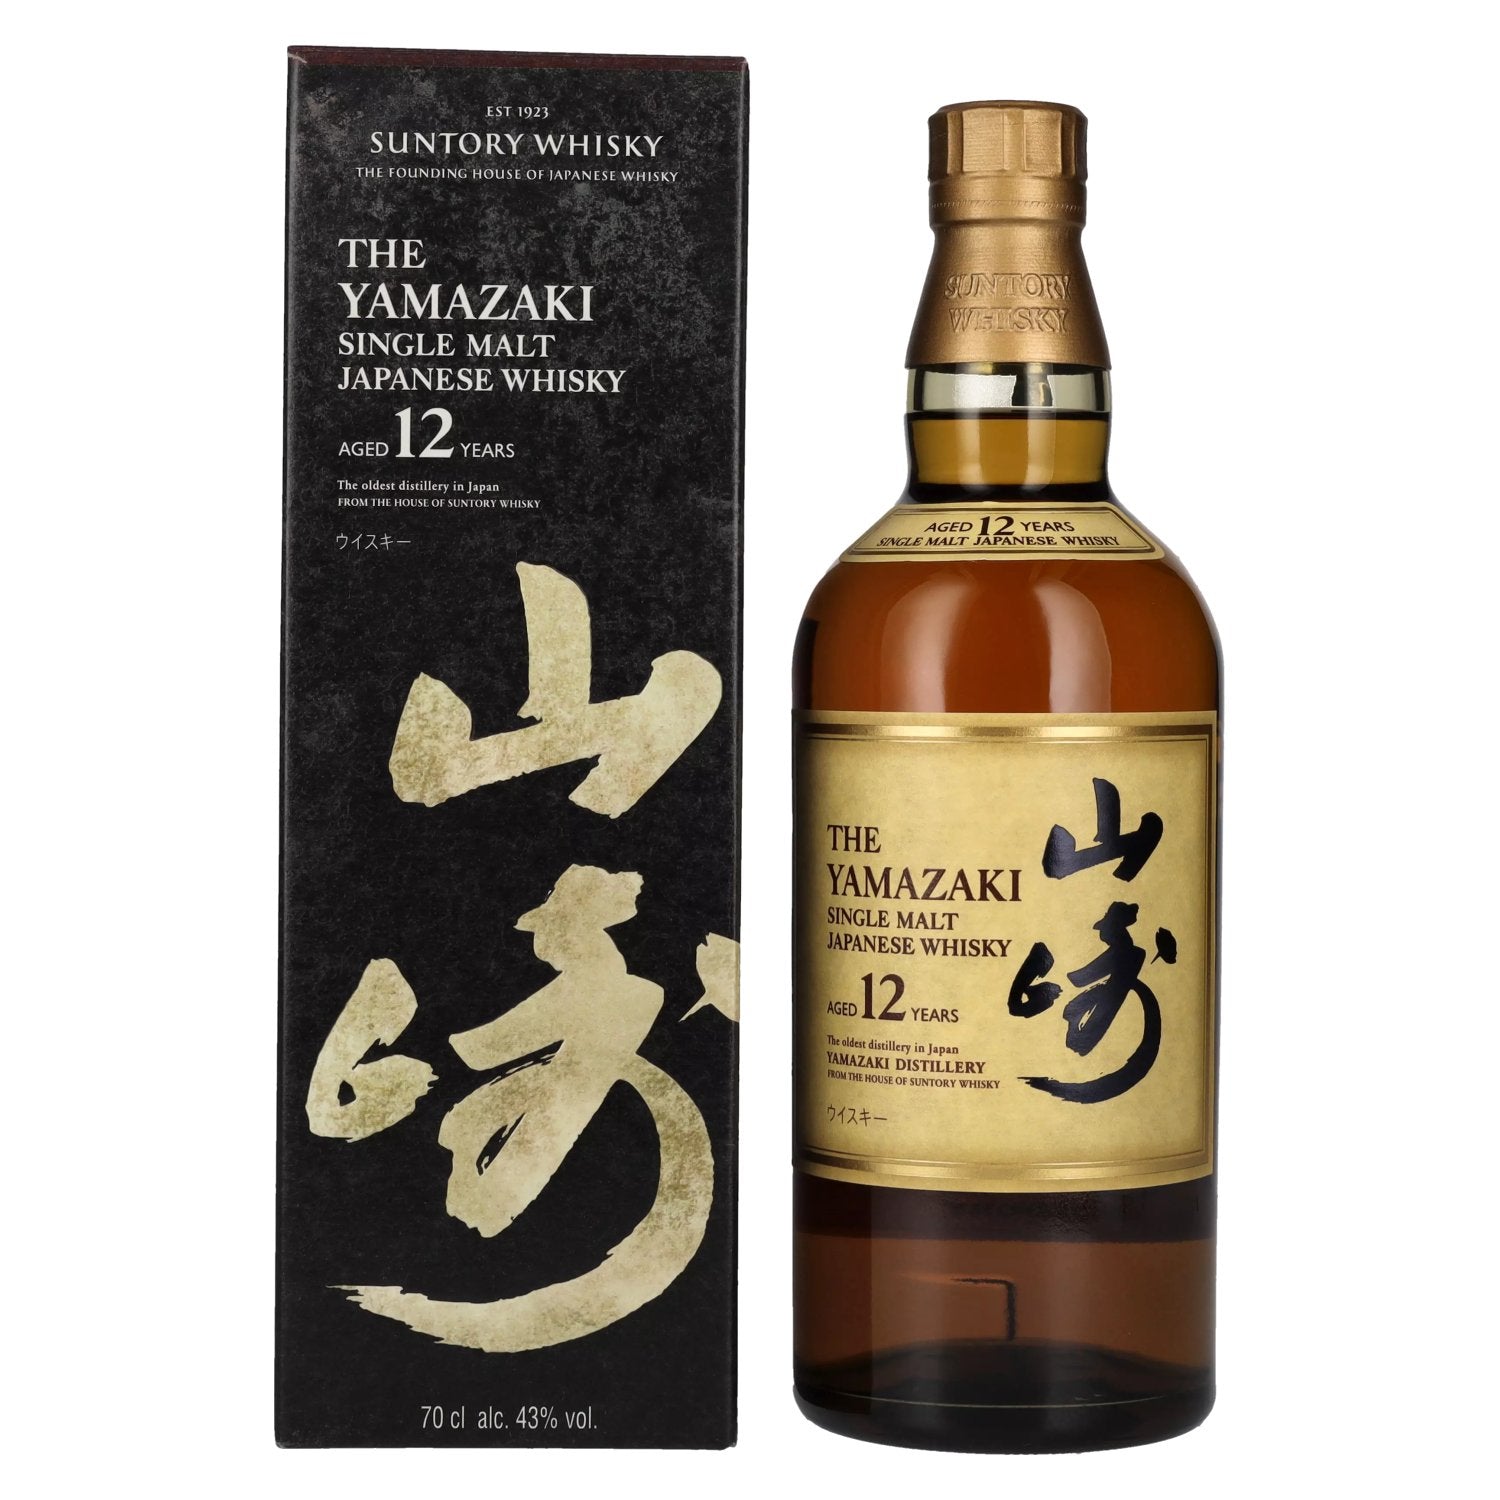 Suntory The Yamazaki 12 Years Old Single Malt Japanese Whisky 43% Vol. 0,7l in Giftbox